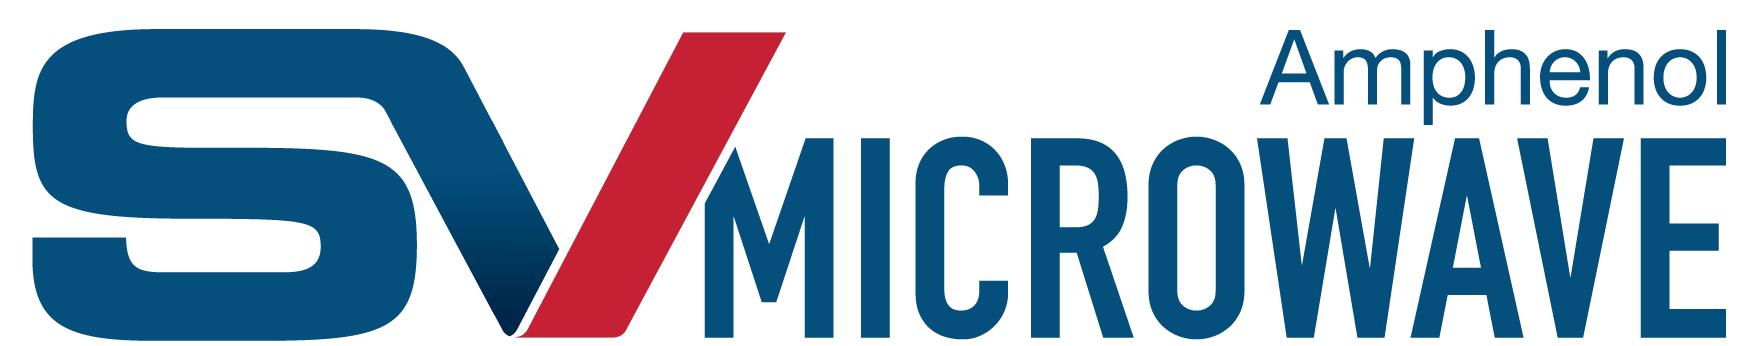 svmicrowave Logo